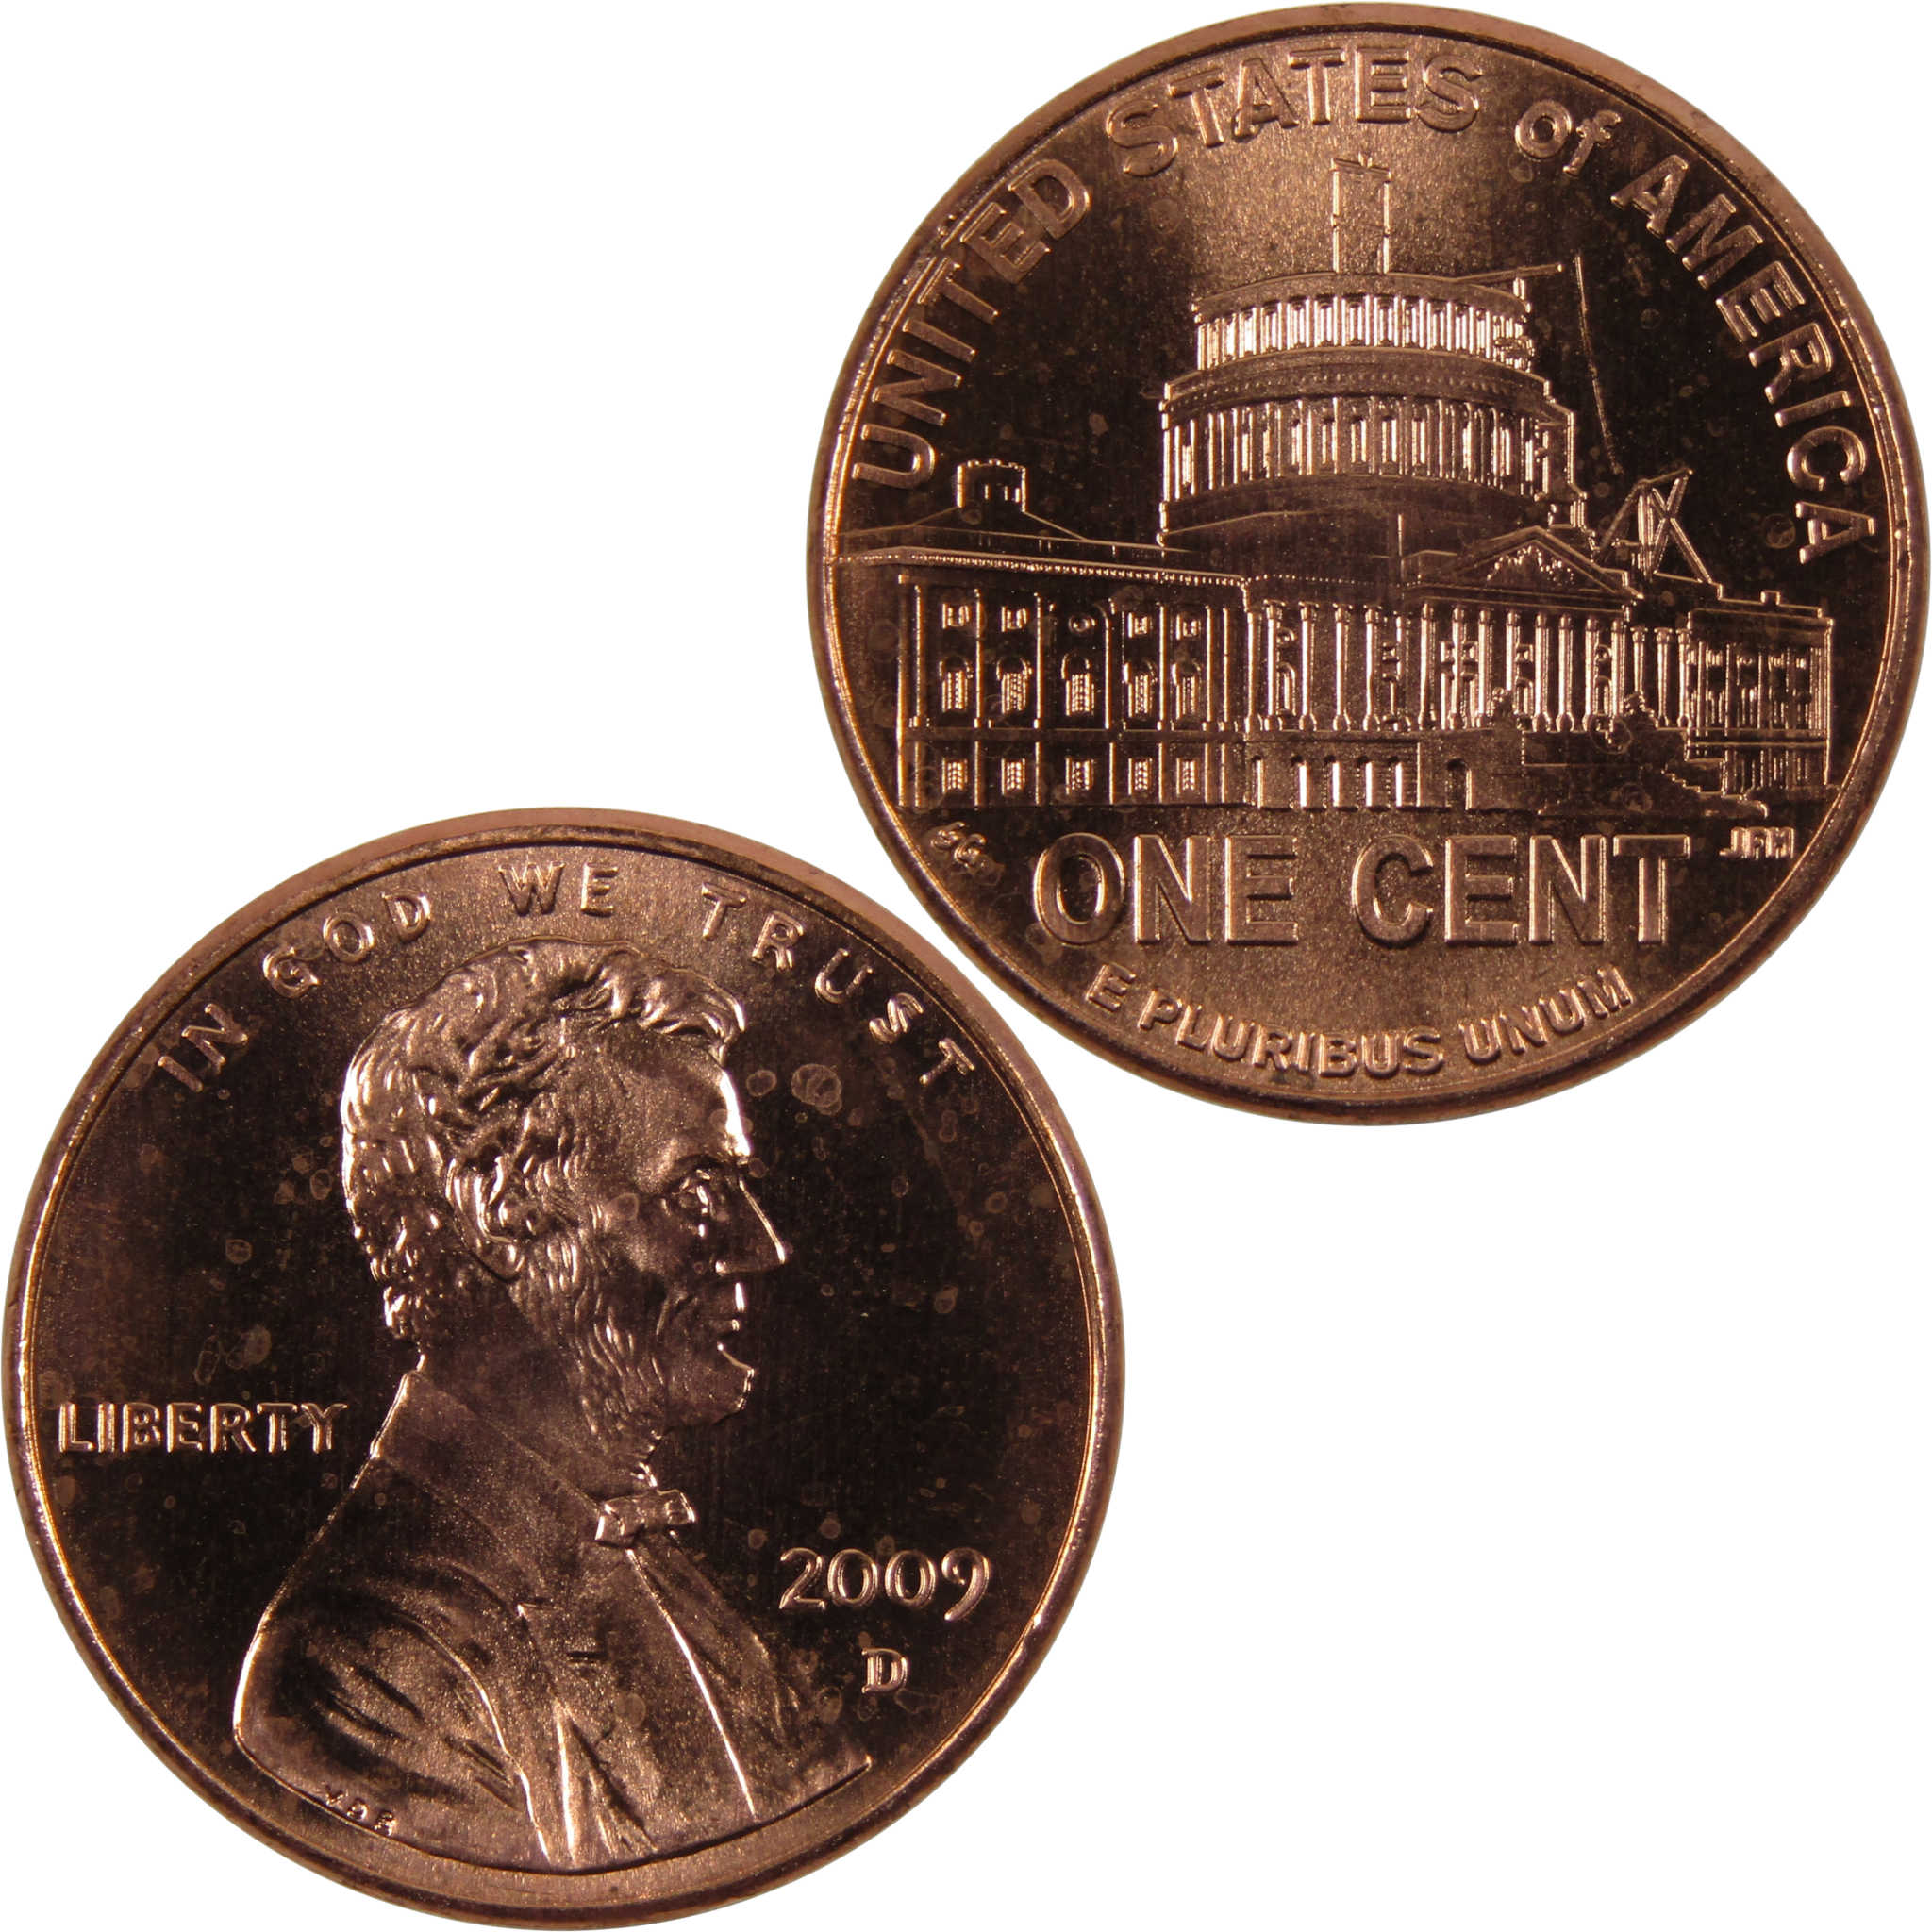 2009 D Presidency Lincoln Bicentennial Cent BU Uncirculated 1c Coin